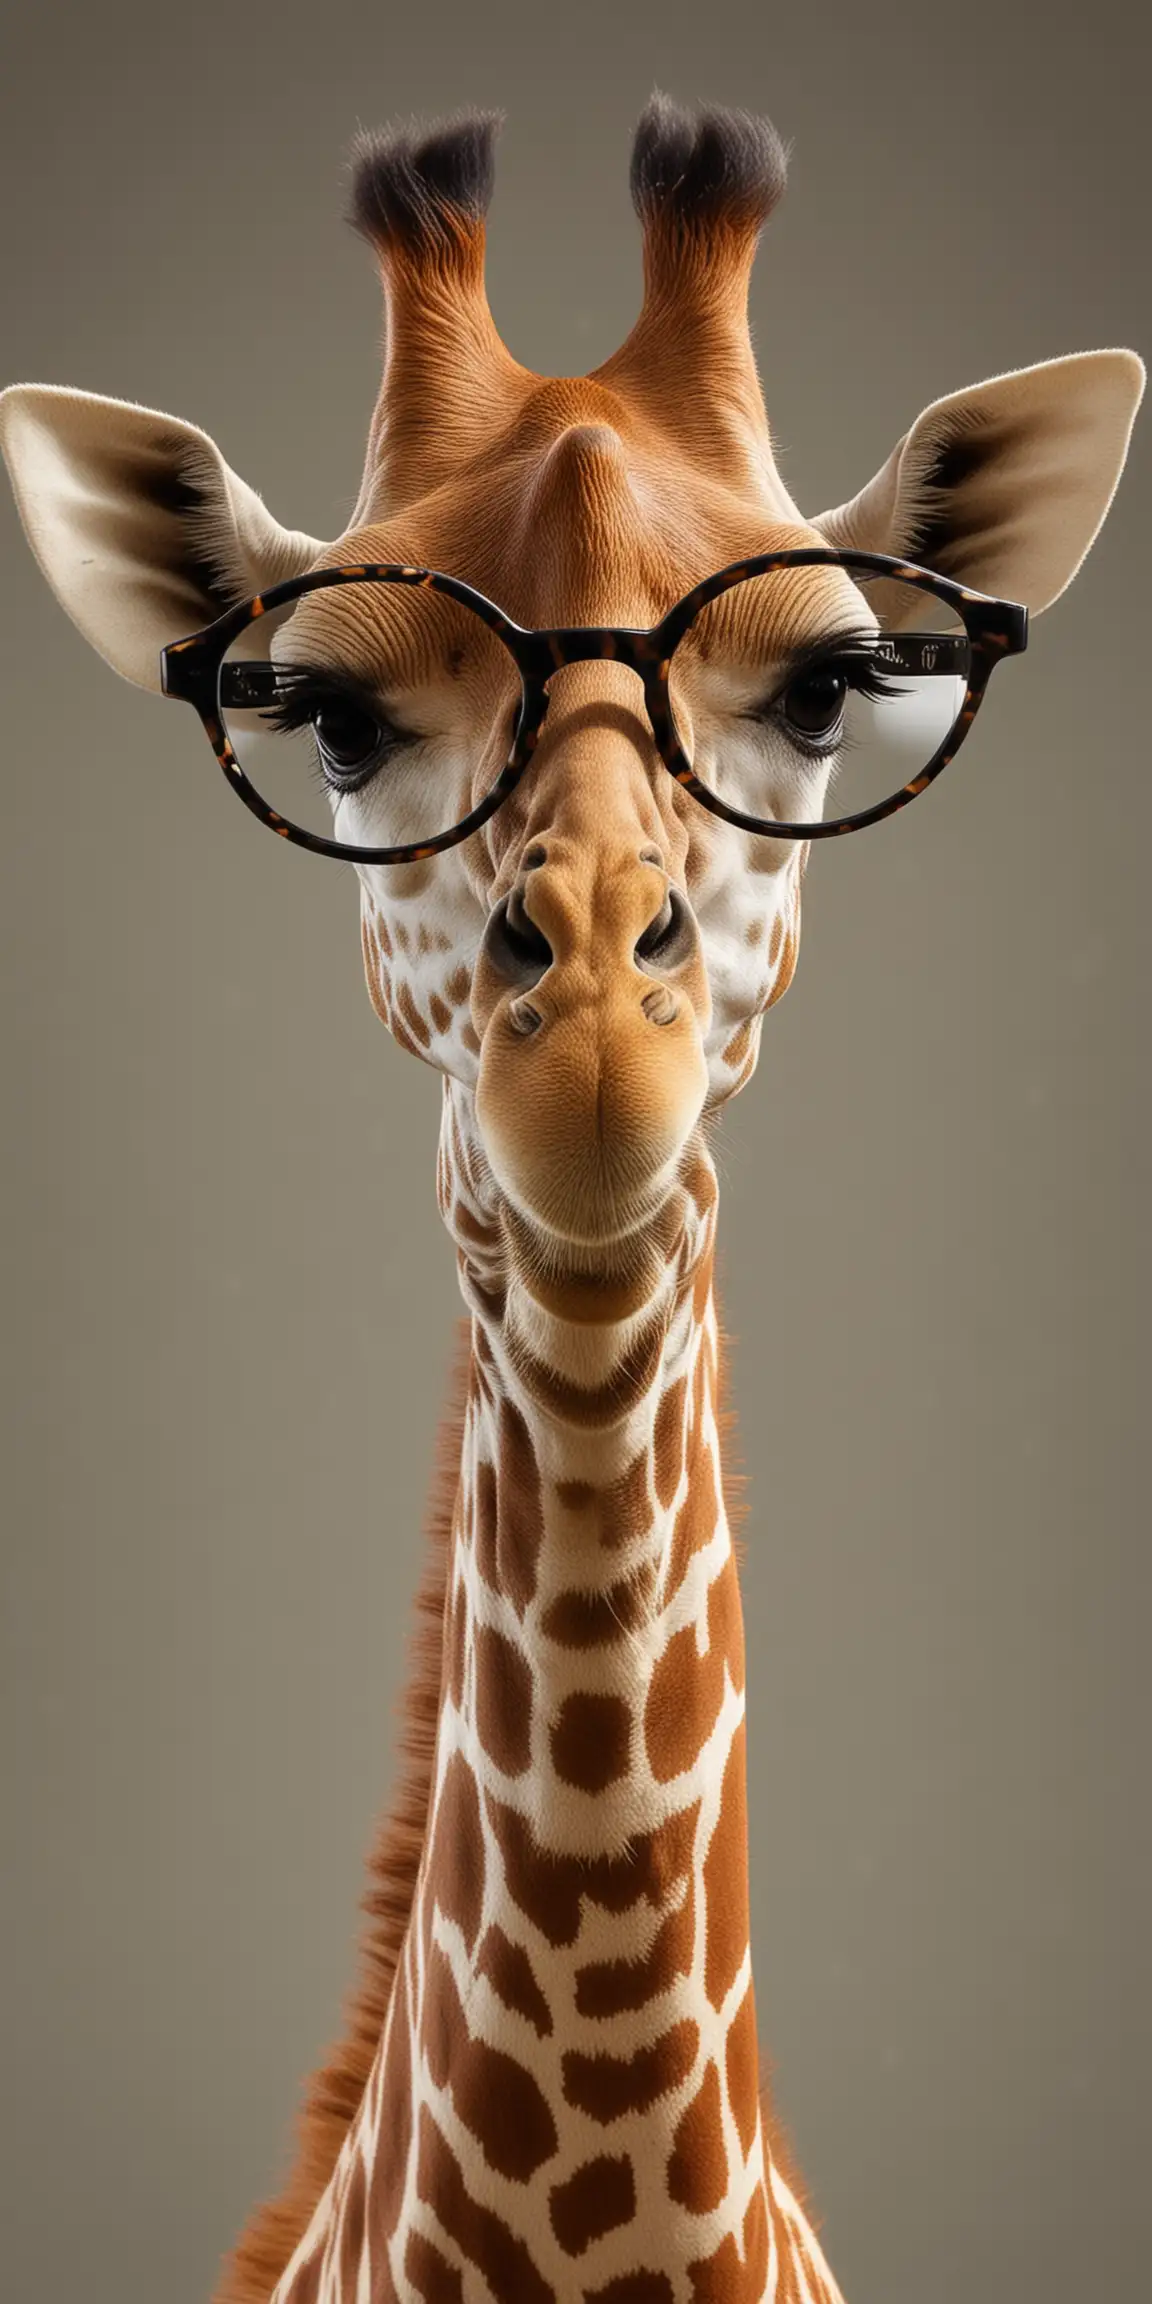 giraffe waring glasses